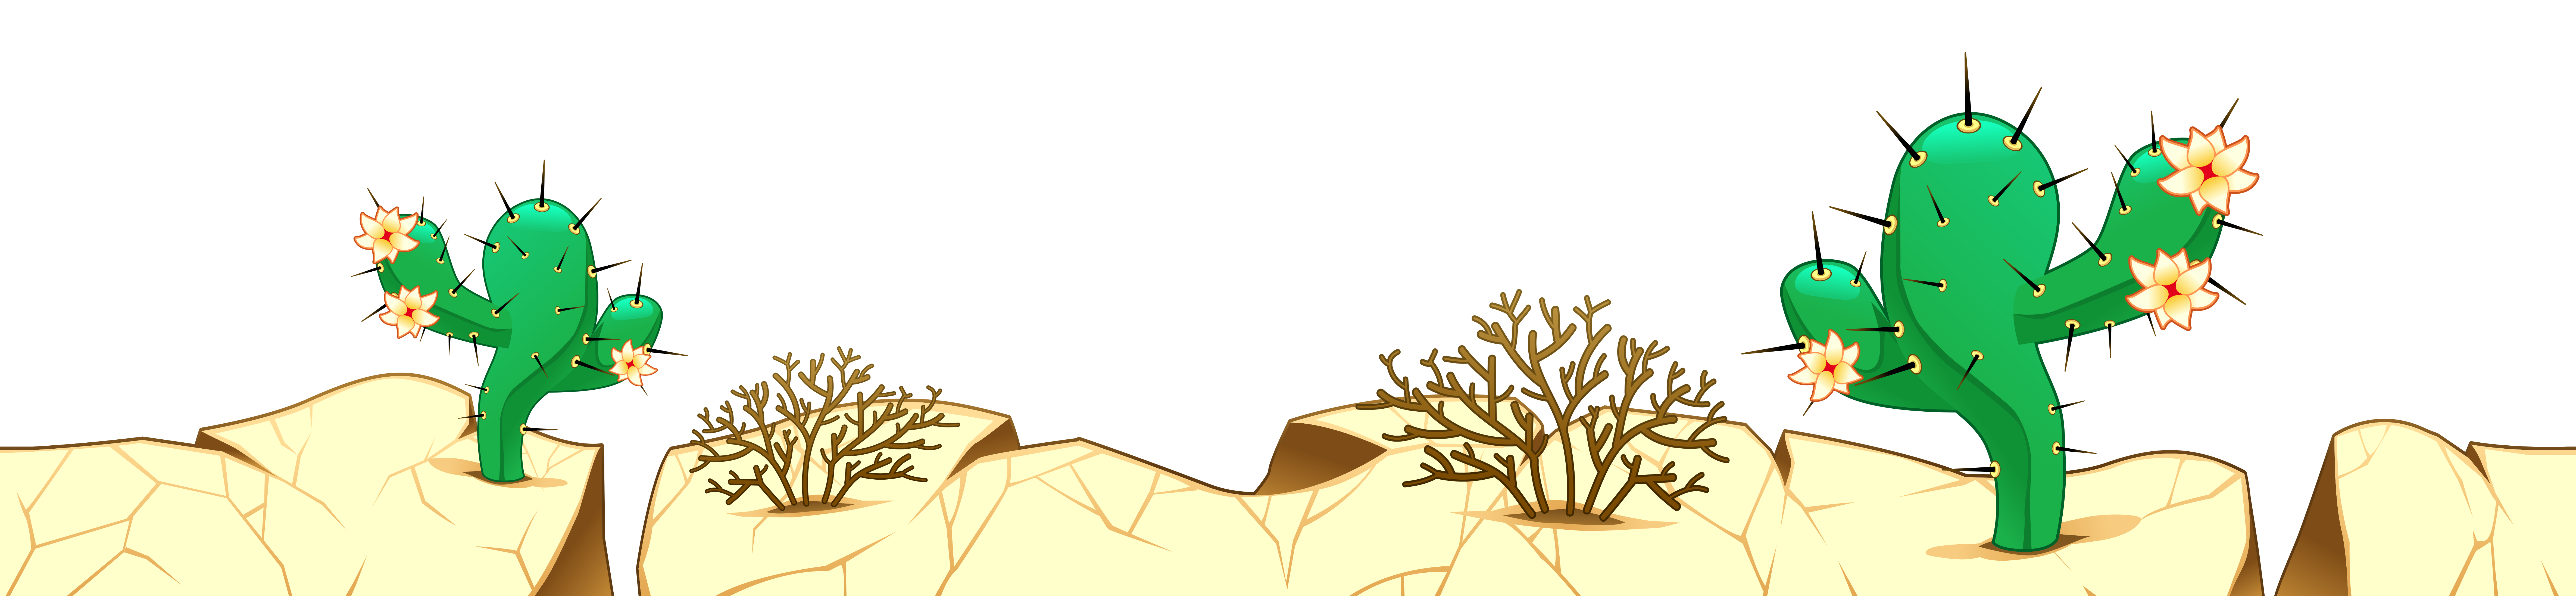 desert clipart transparent